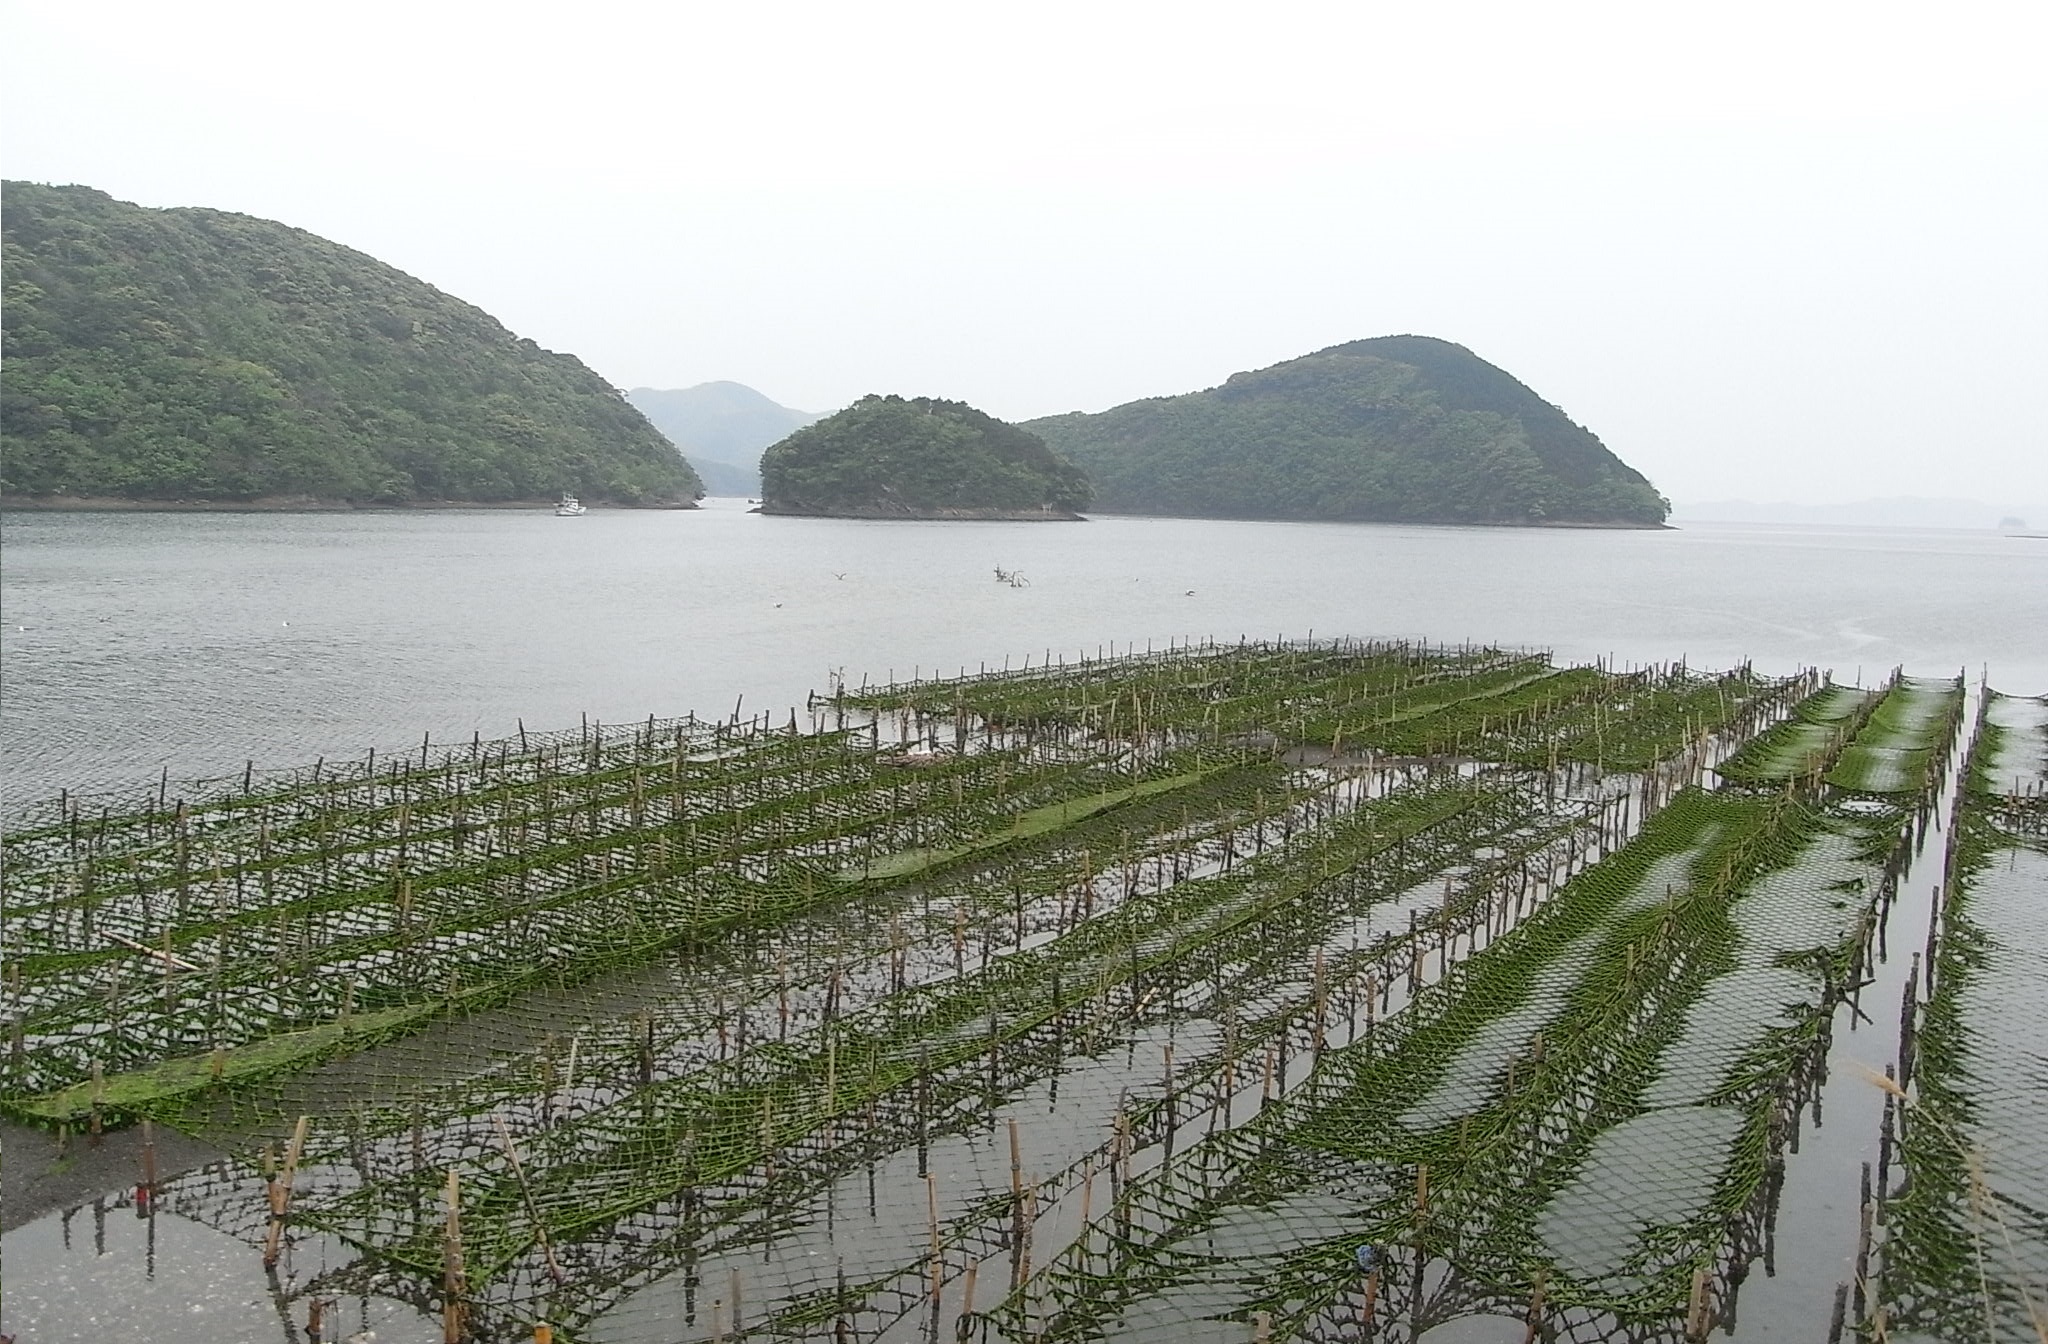 Lưới trồng rong biển